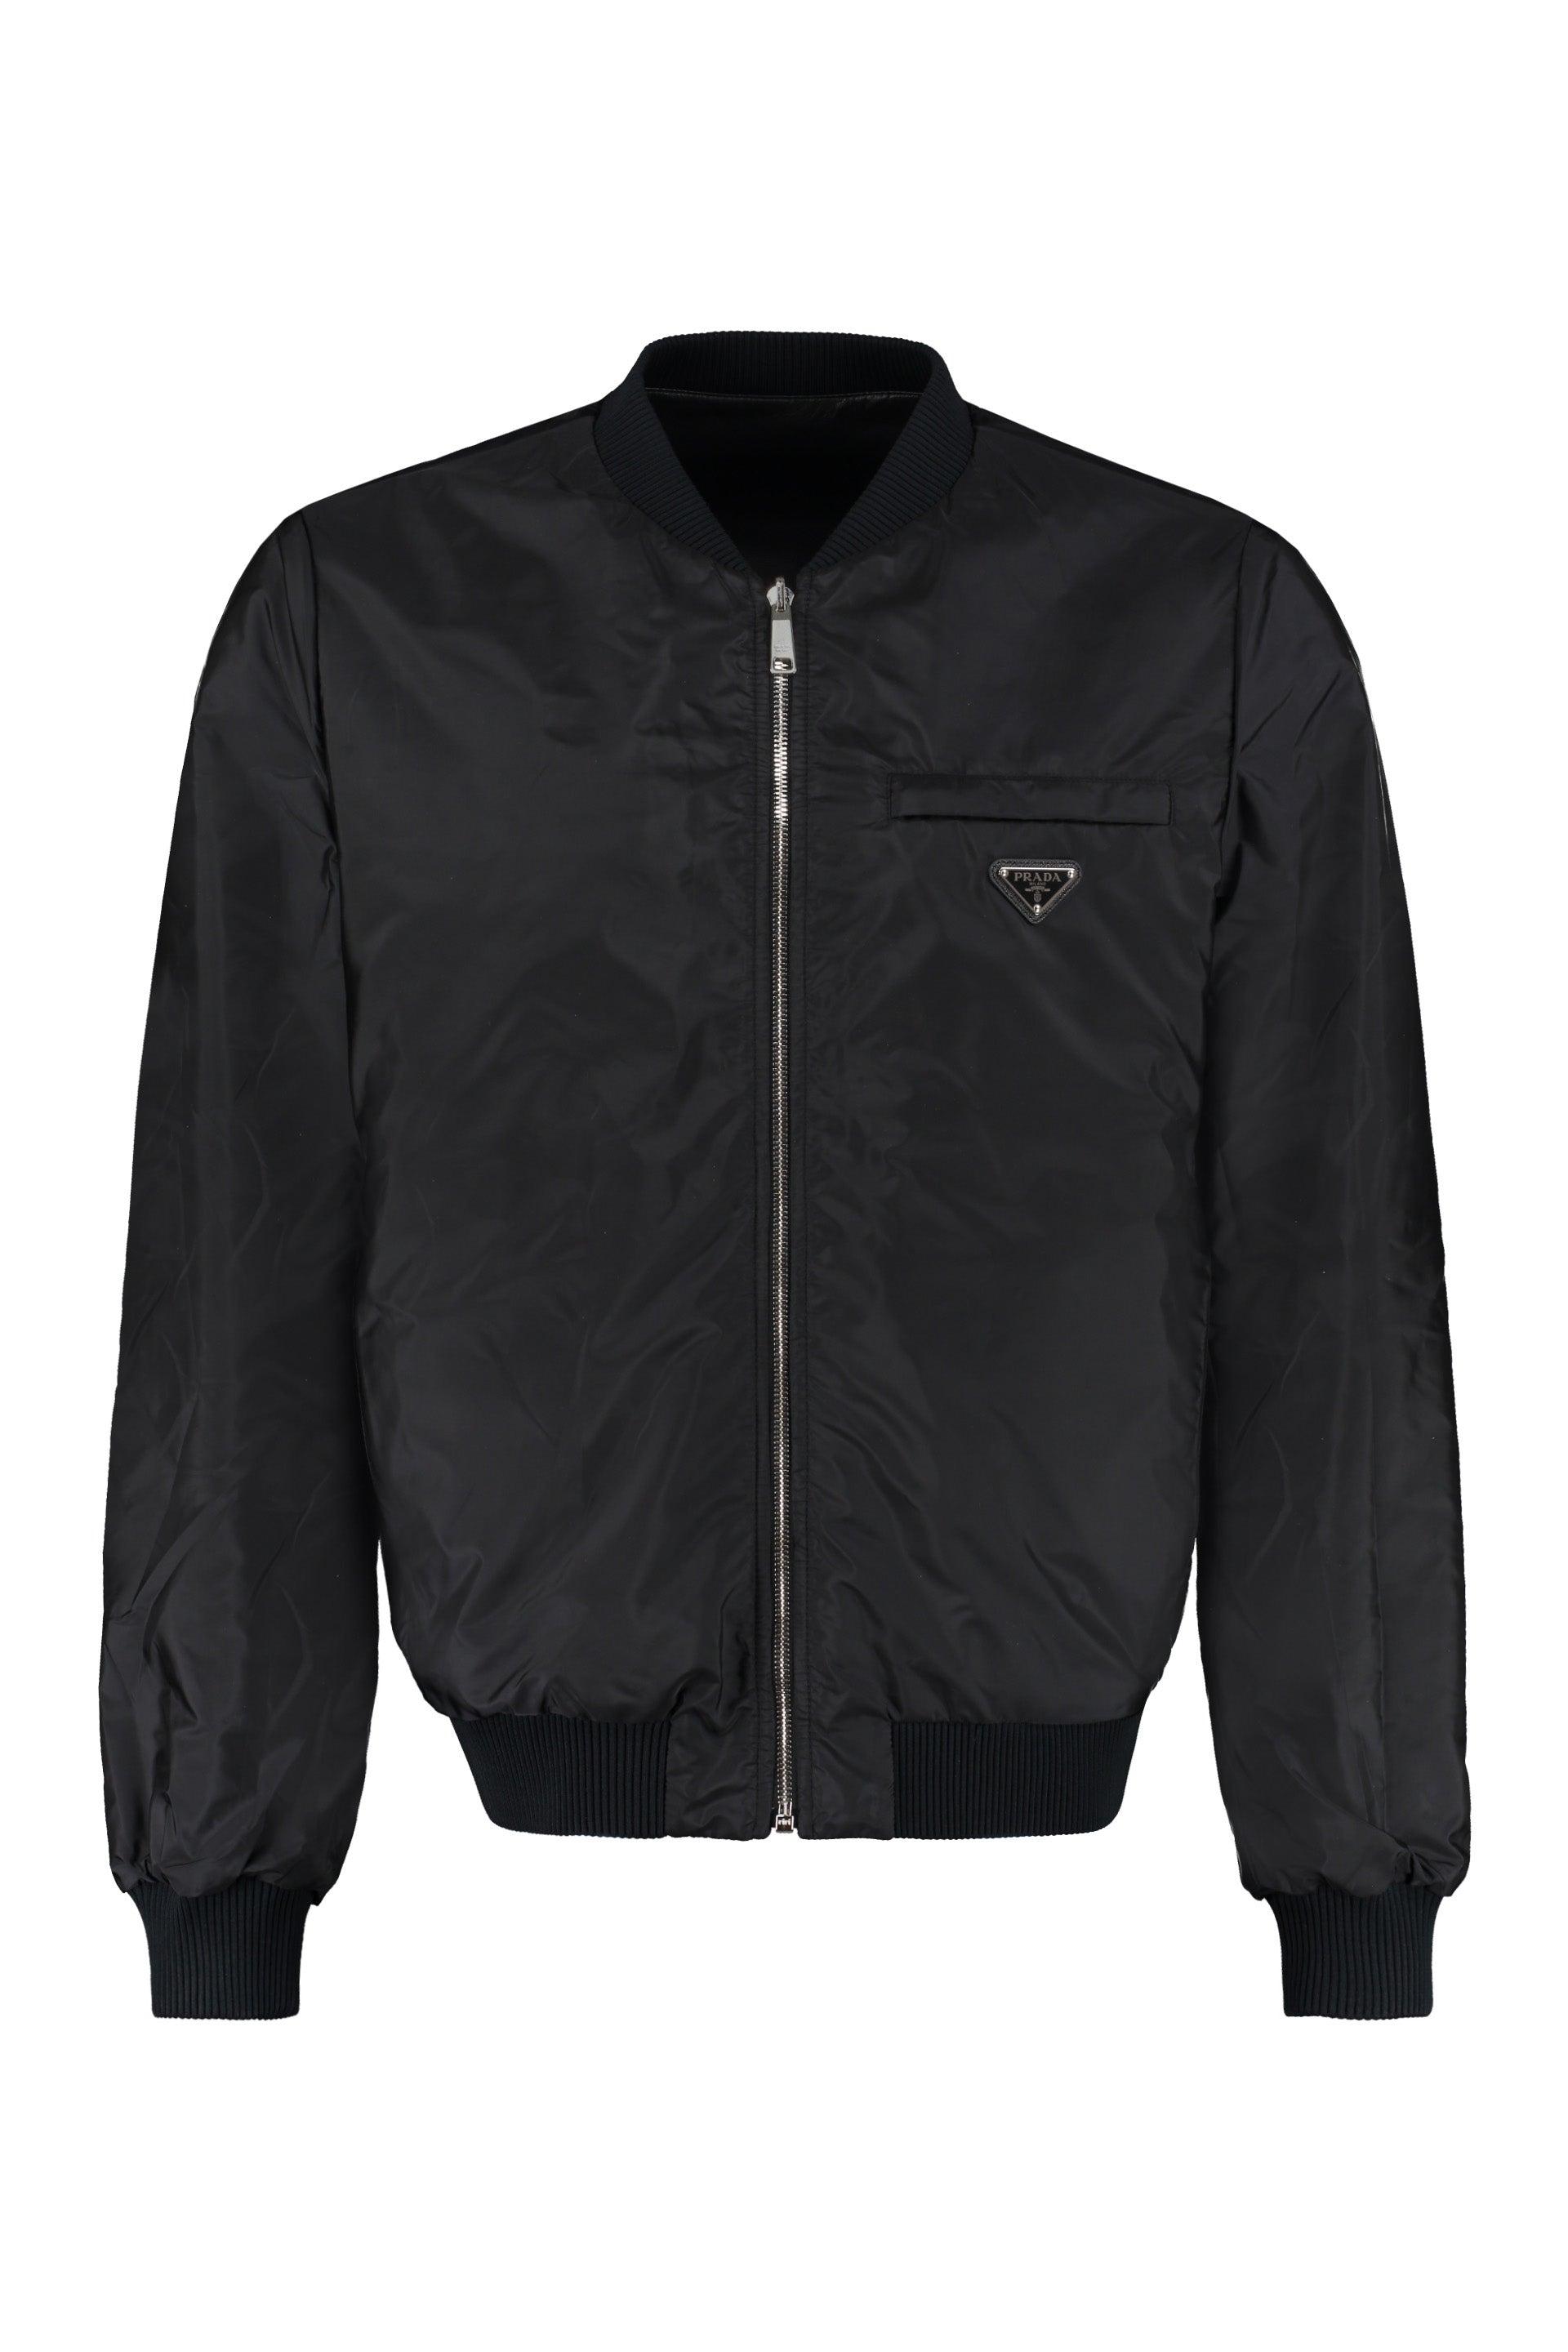 Prada Re-nylon And Leather Reversible Bomber Jacket in Black for Men | Lyst  UK